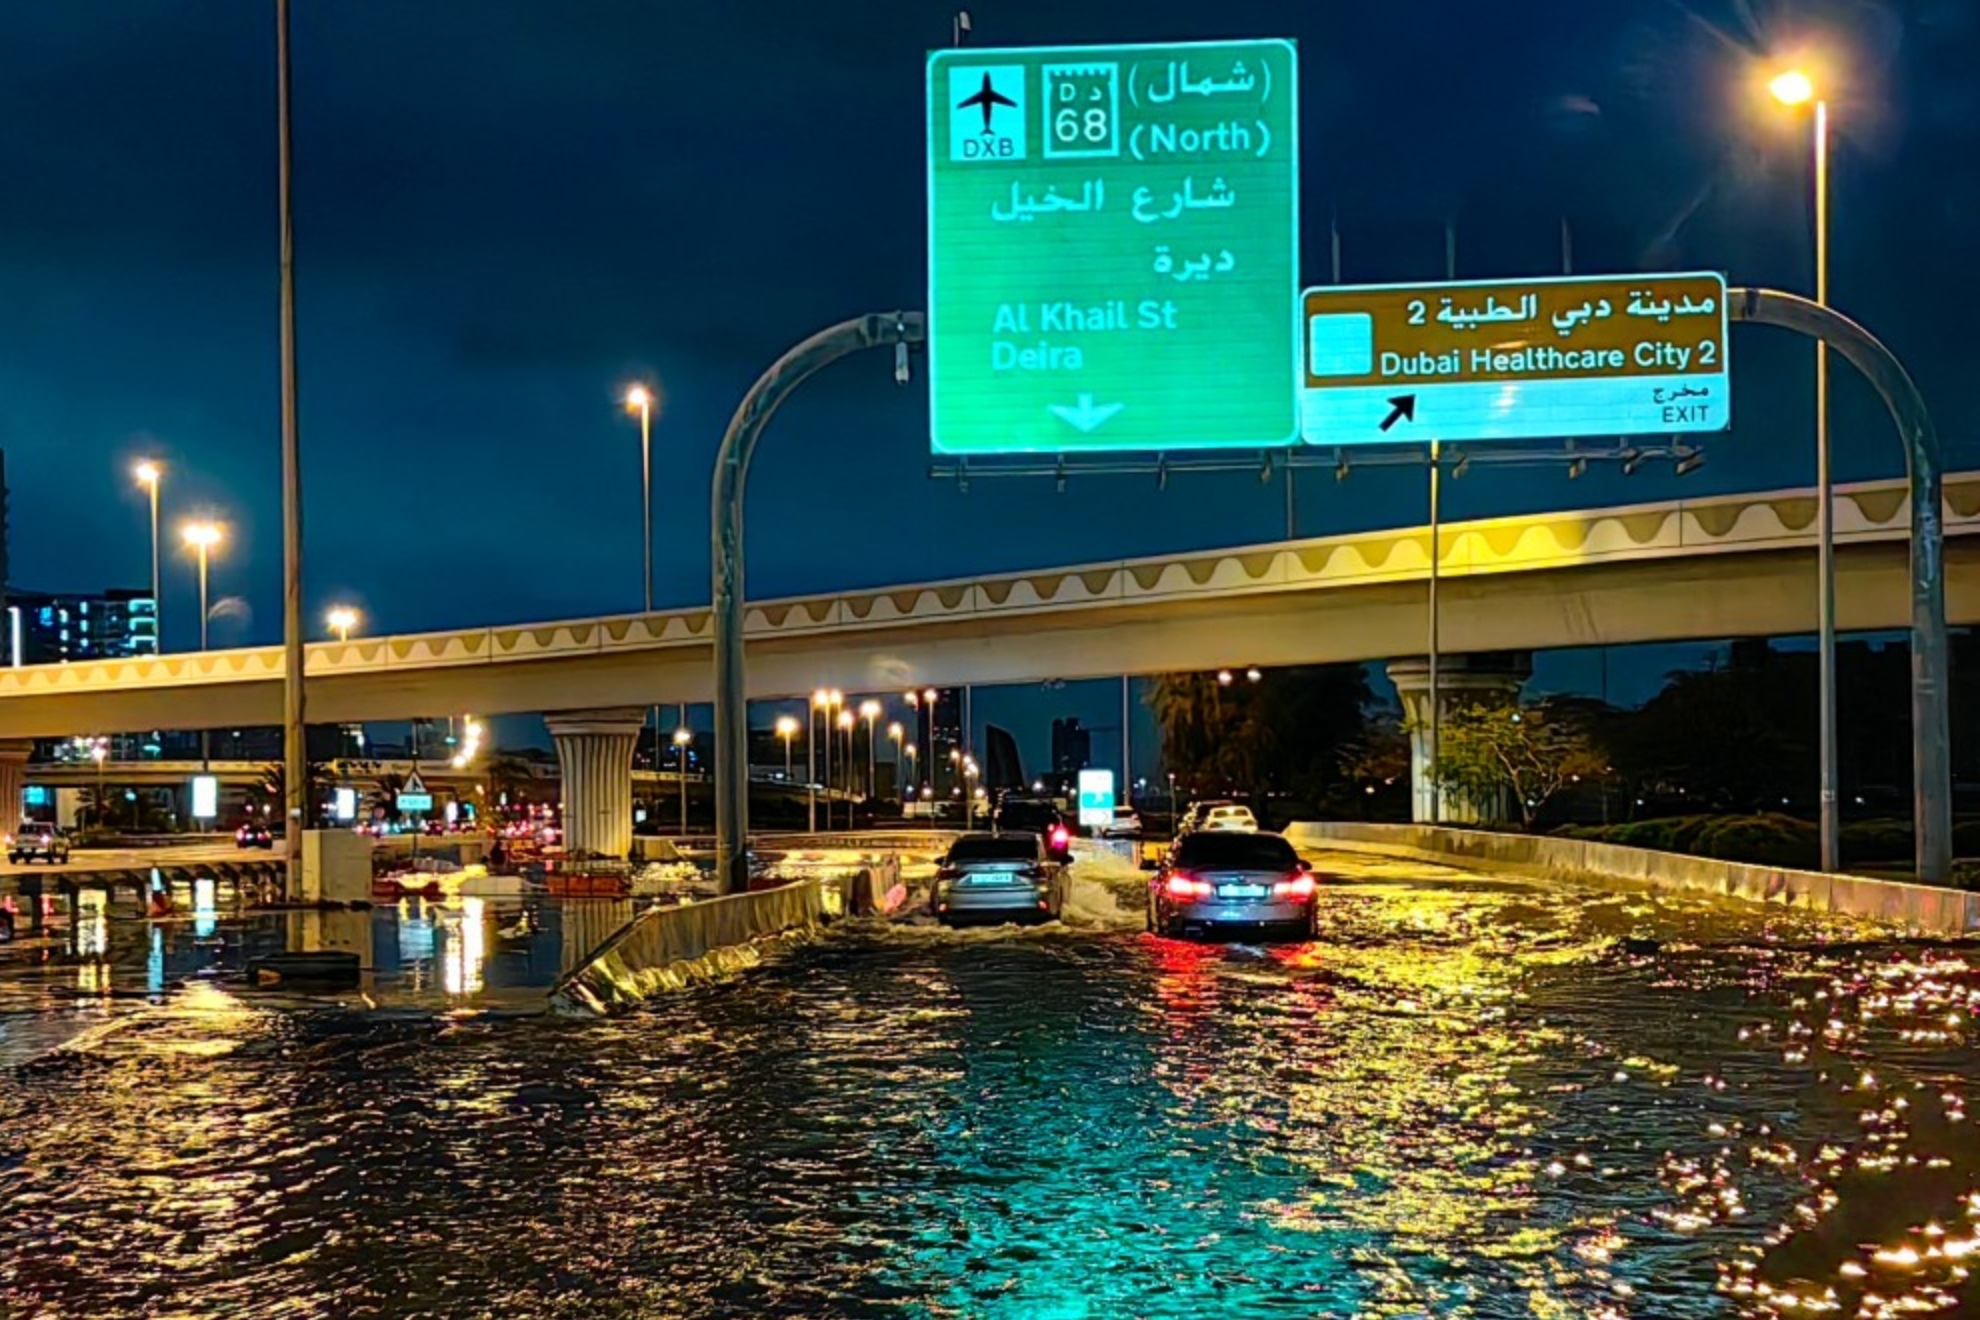 lluvias torrenciales en Dubi